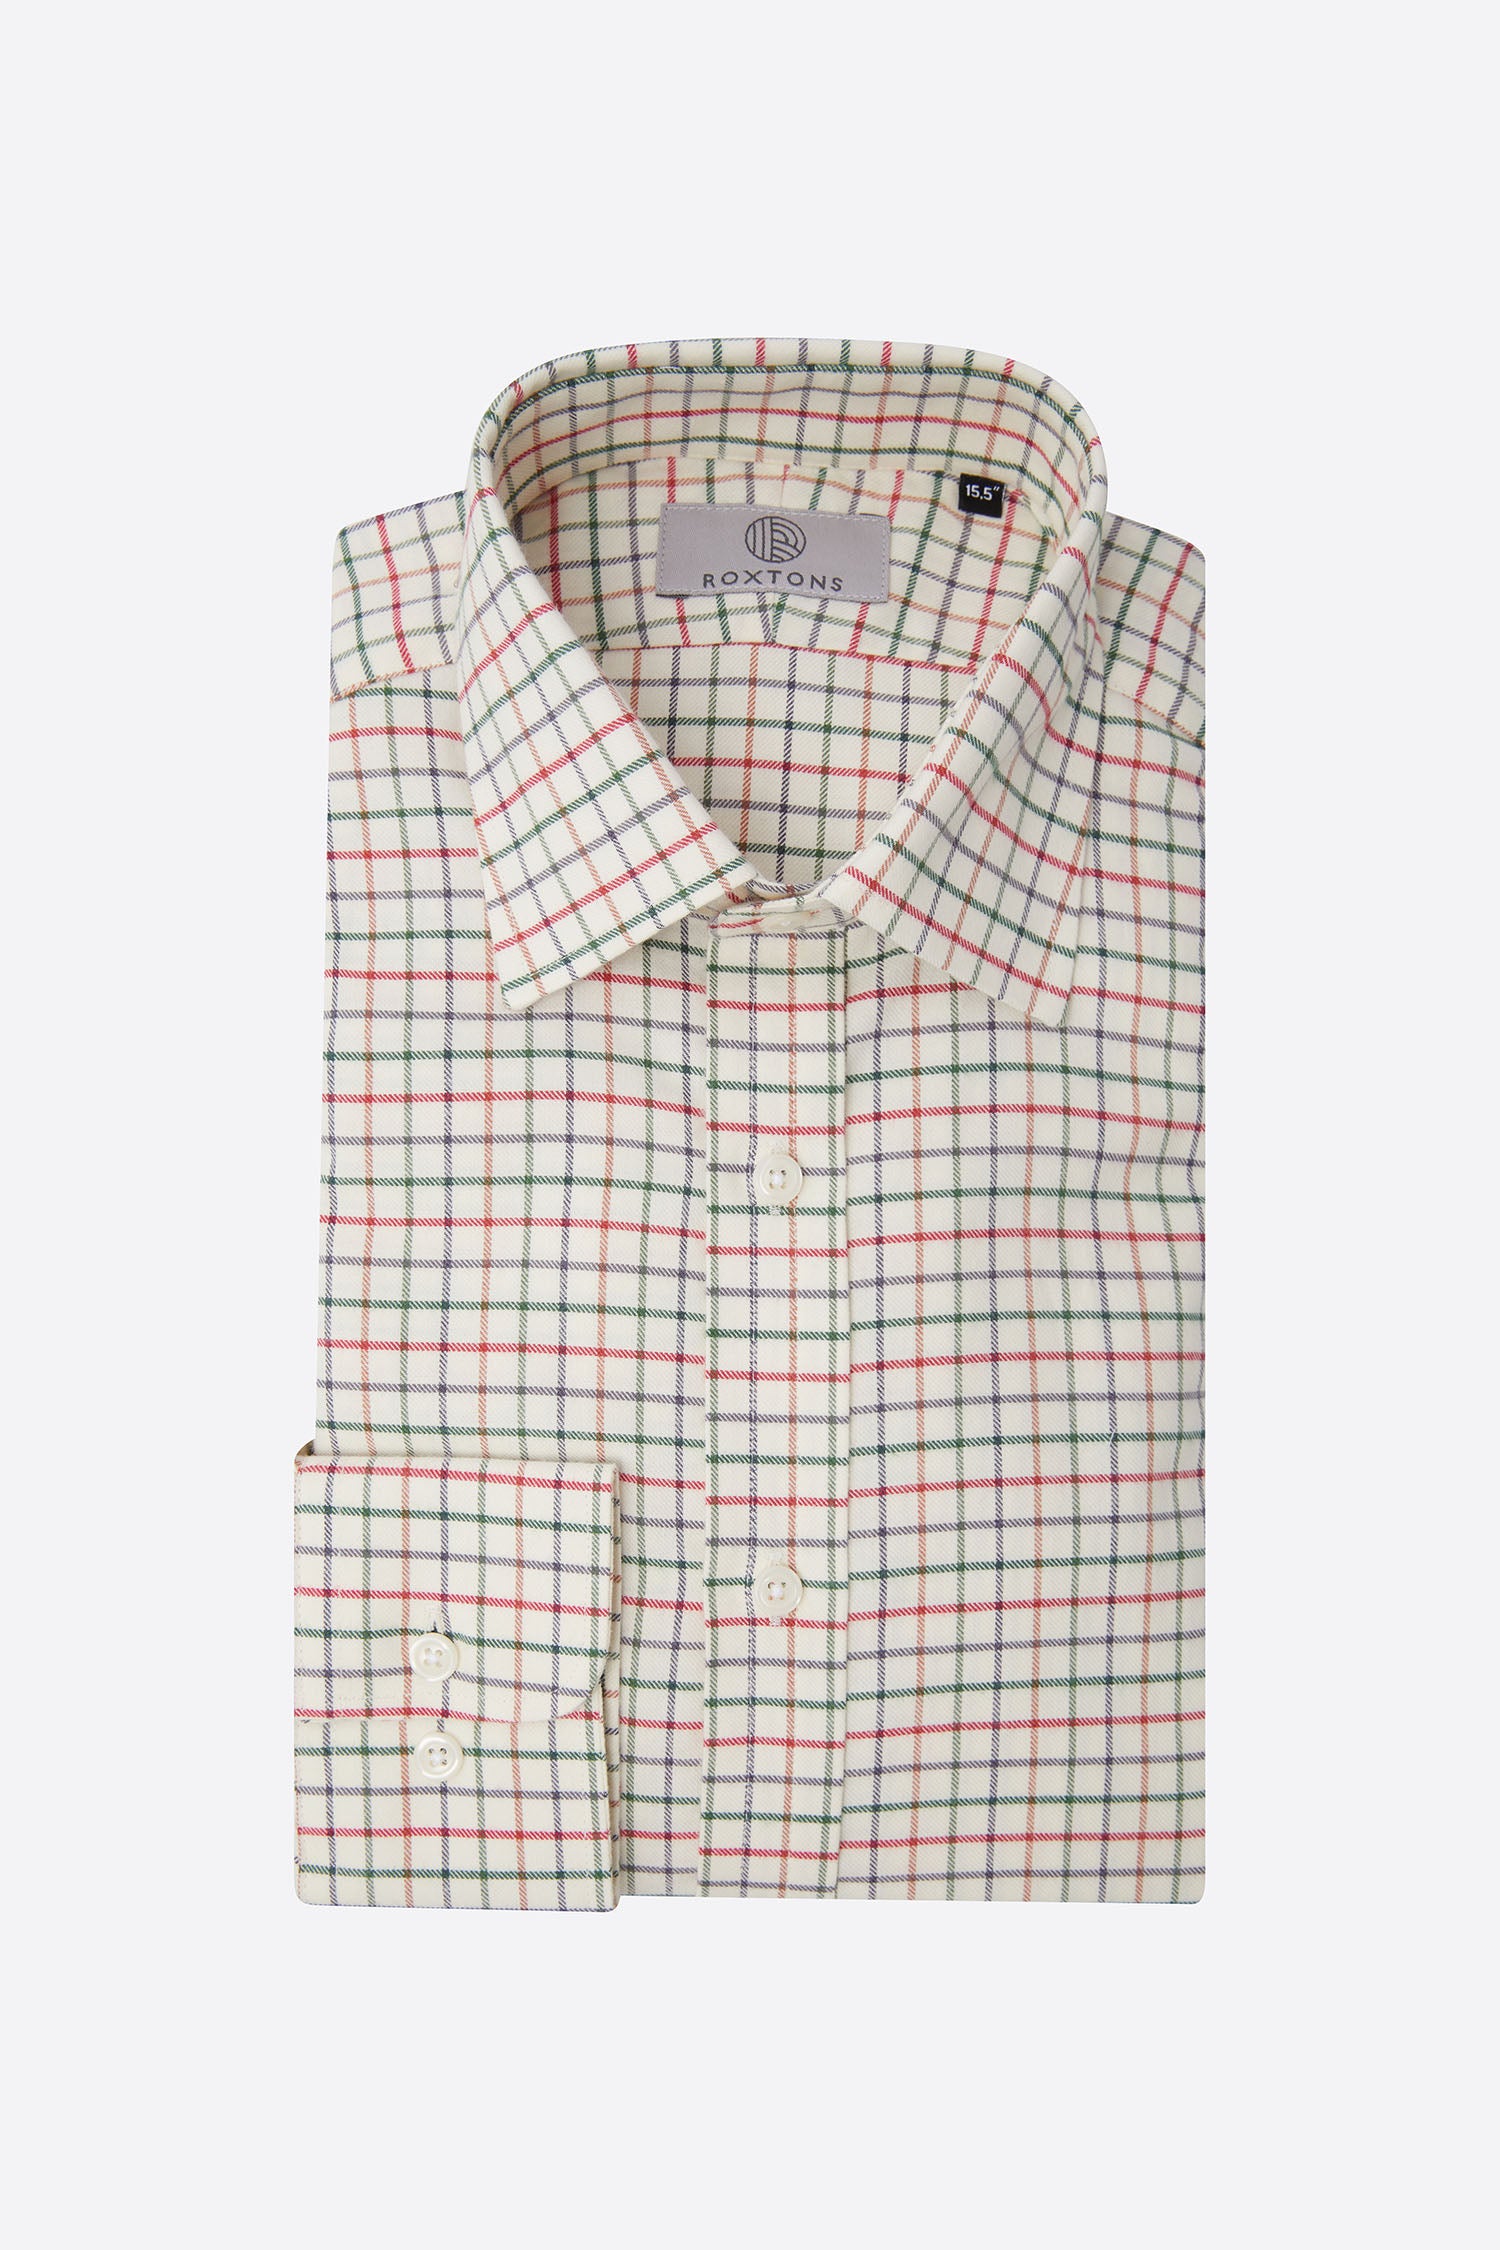 Roxtons - Lambourn Check Shirt